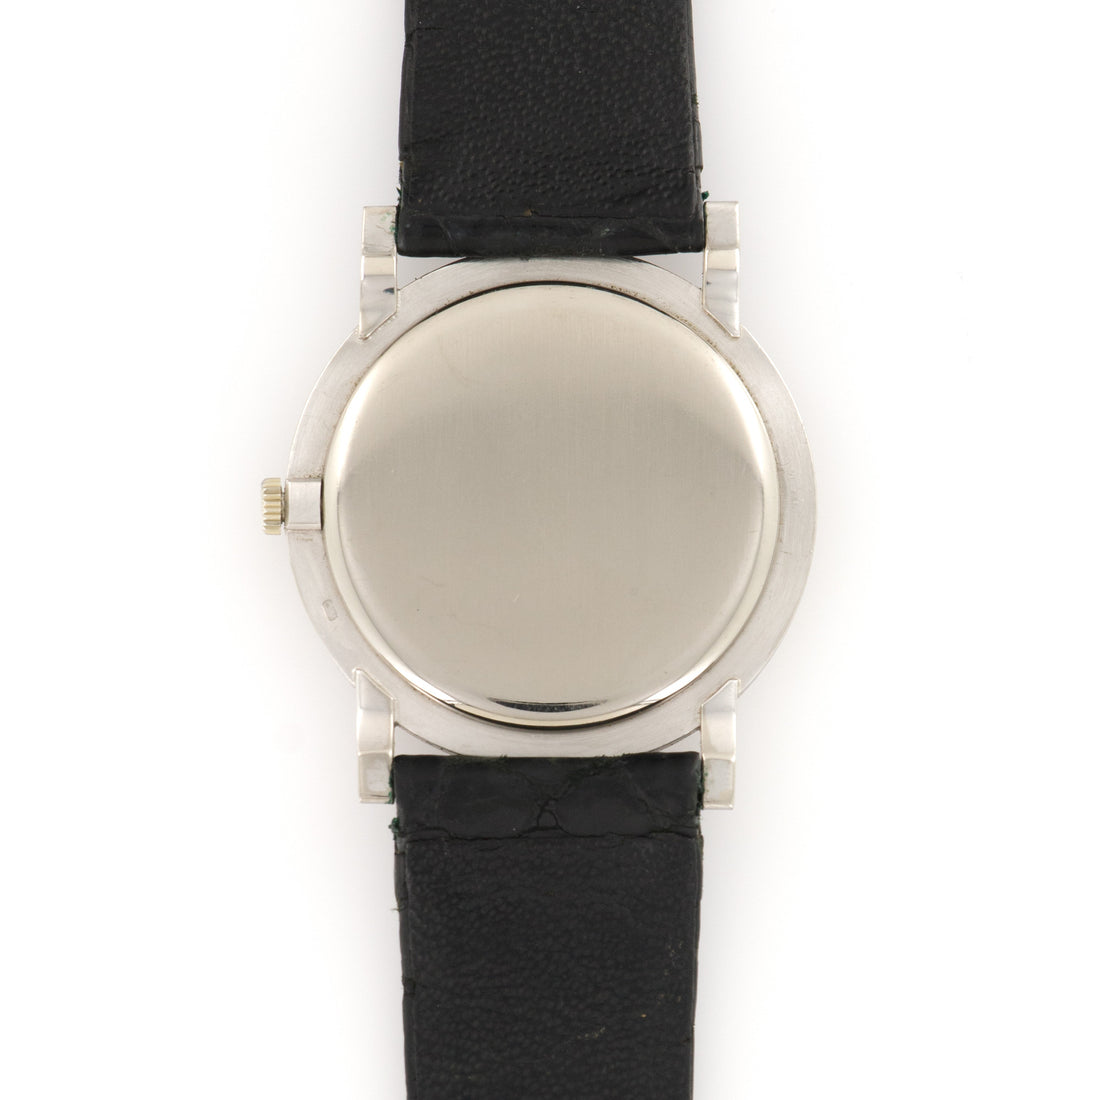 Audemars Piguet White Gold Ultra-Thin Strap Watch